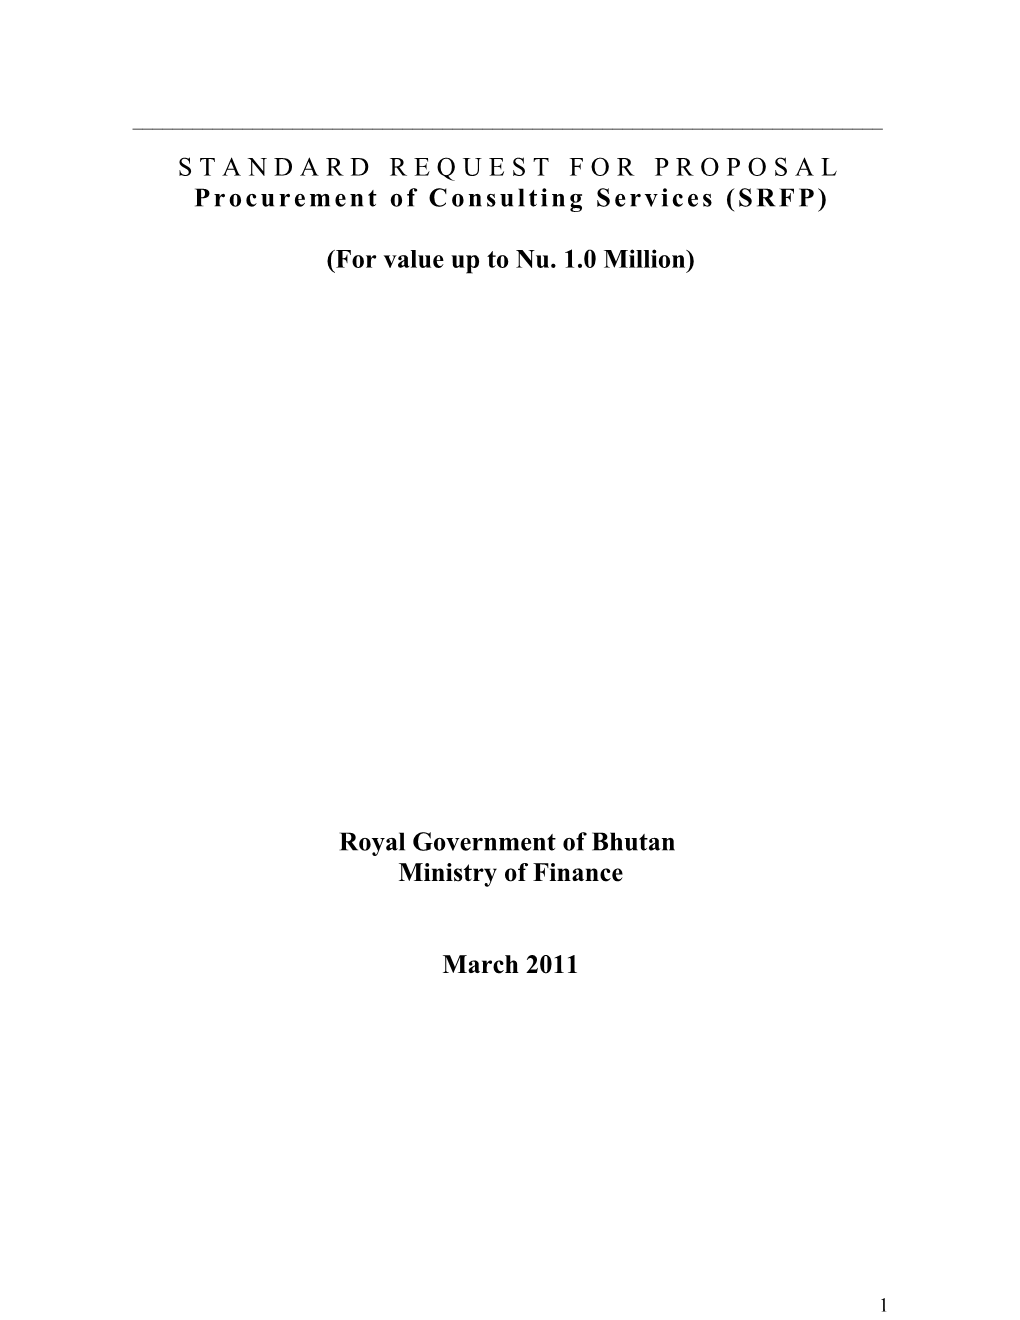 Procurement of Consulting Services (SRFP)